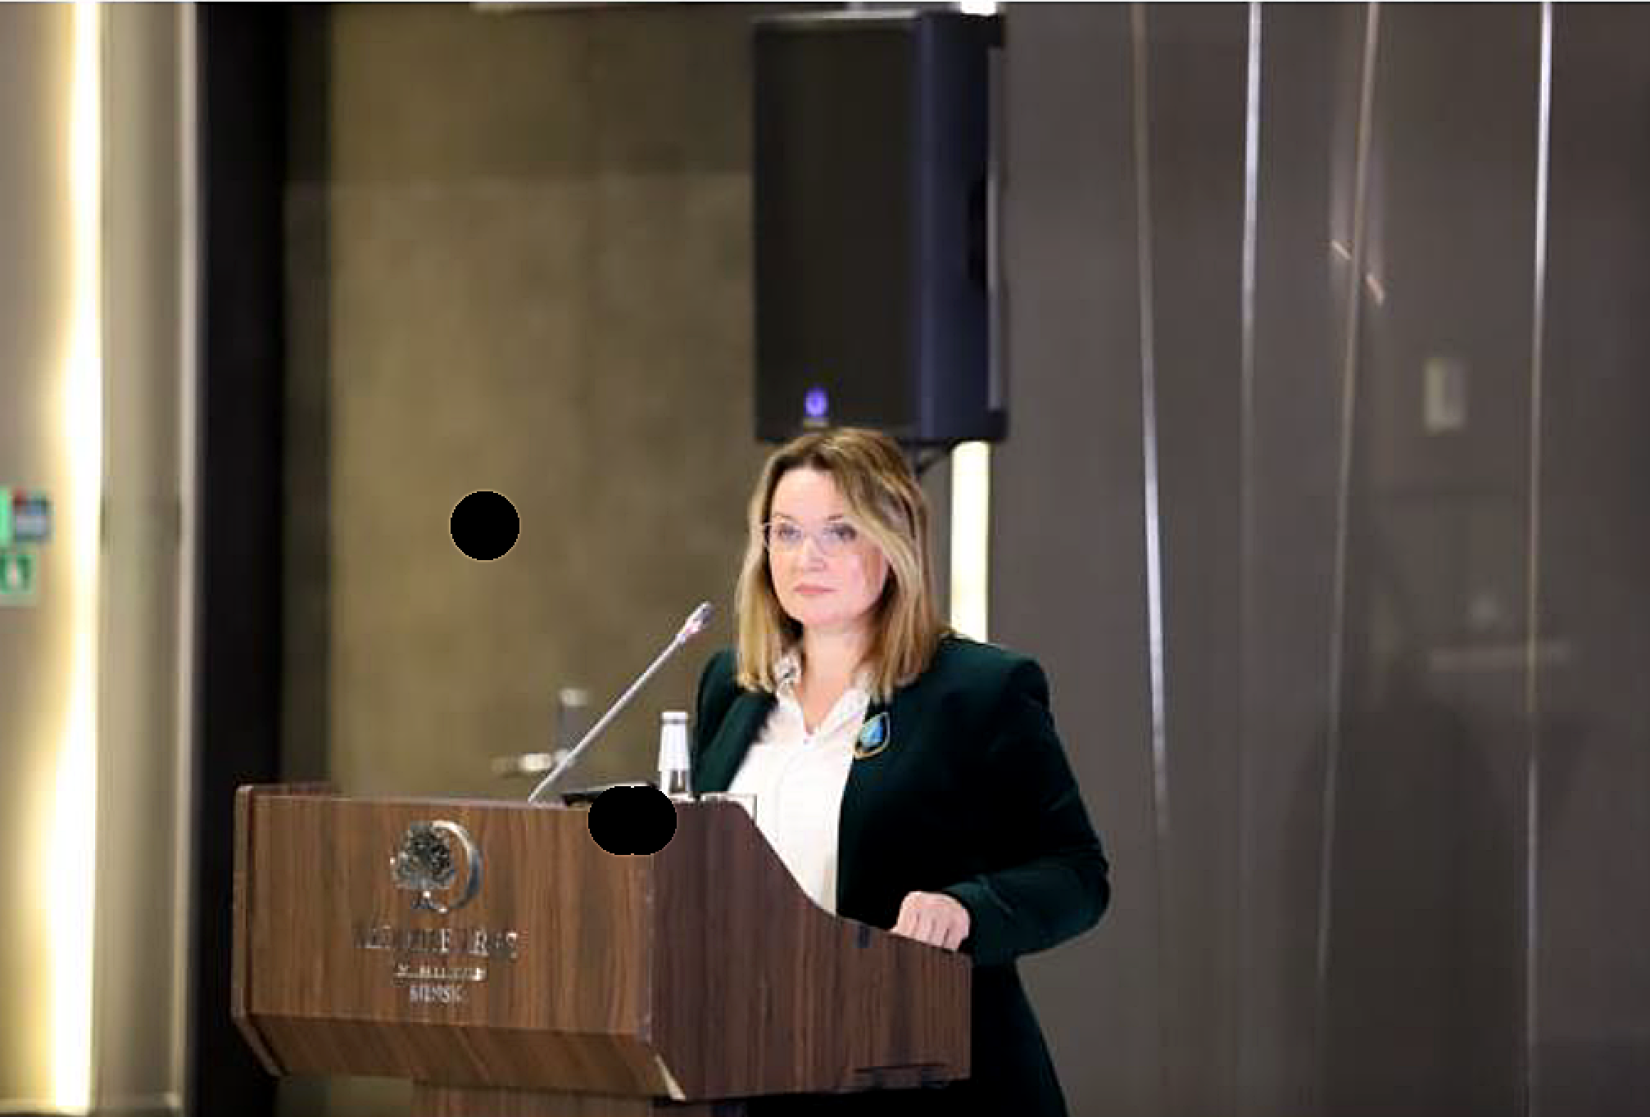 UN Resident Coordinator in Belarus Joanna Kazana-Wisniowiecki